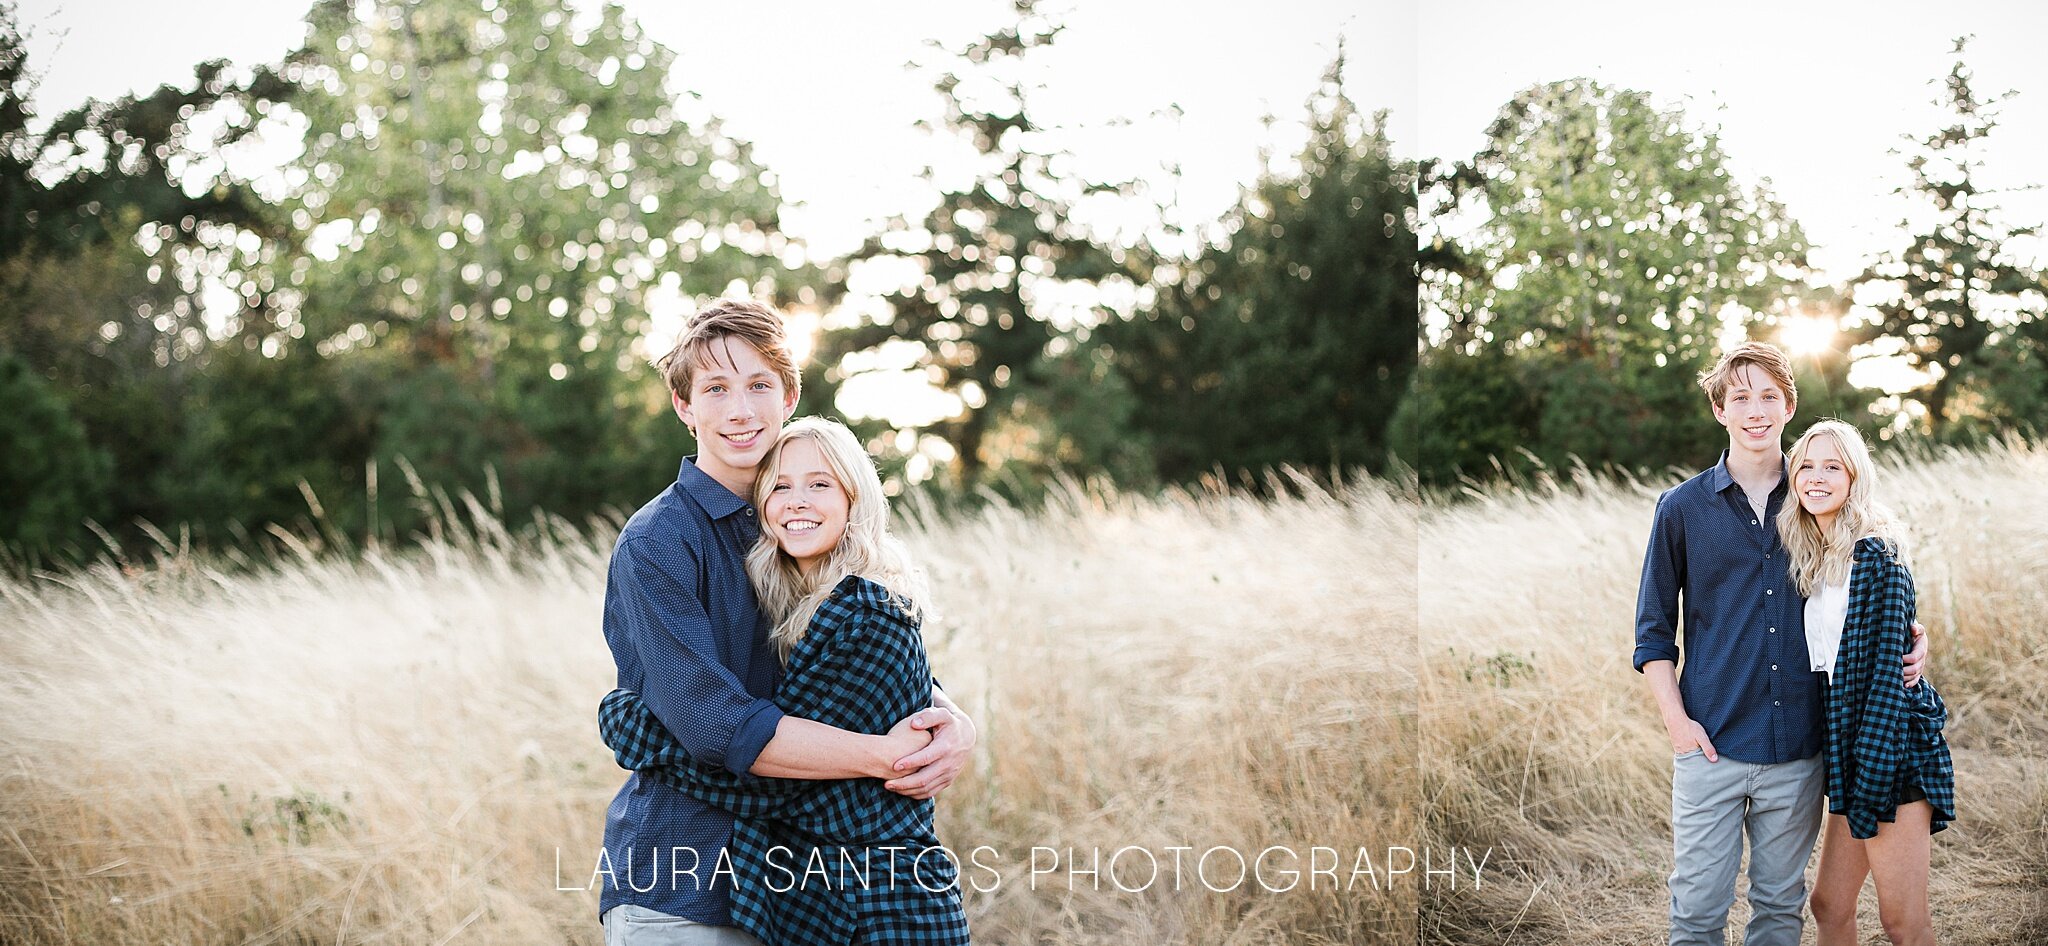 Laura Santos Photography Portland Oregon Family Photographer_1220.jpg